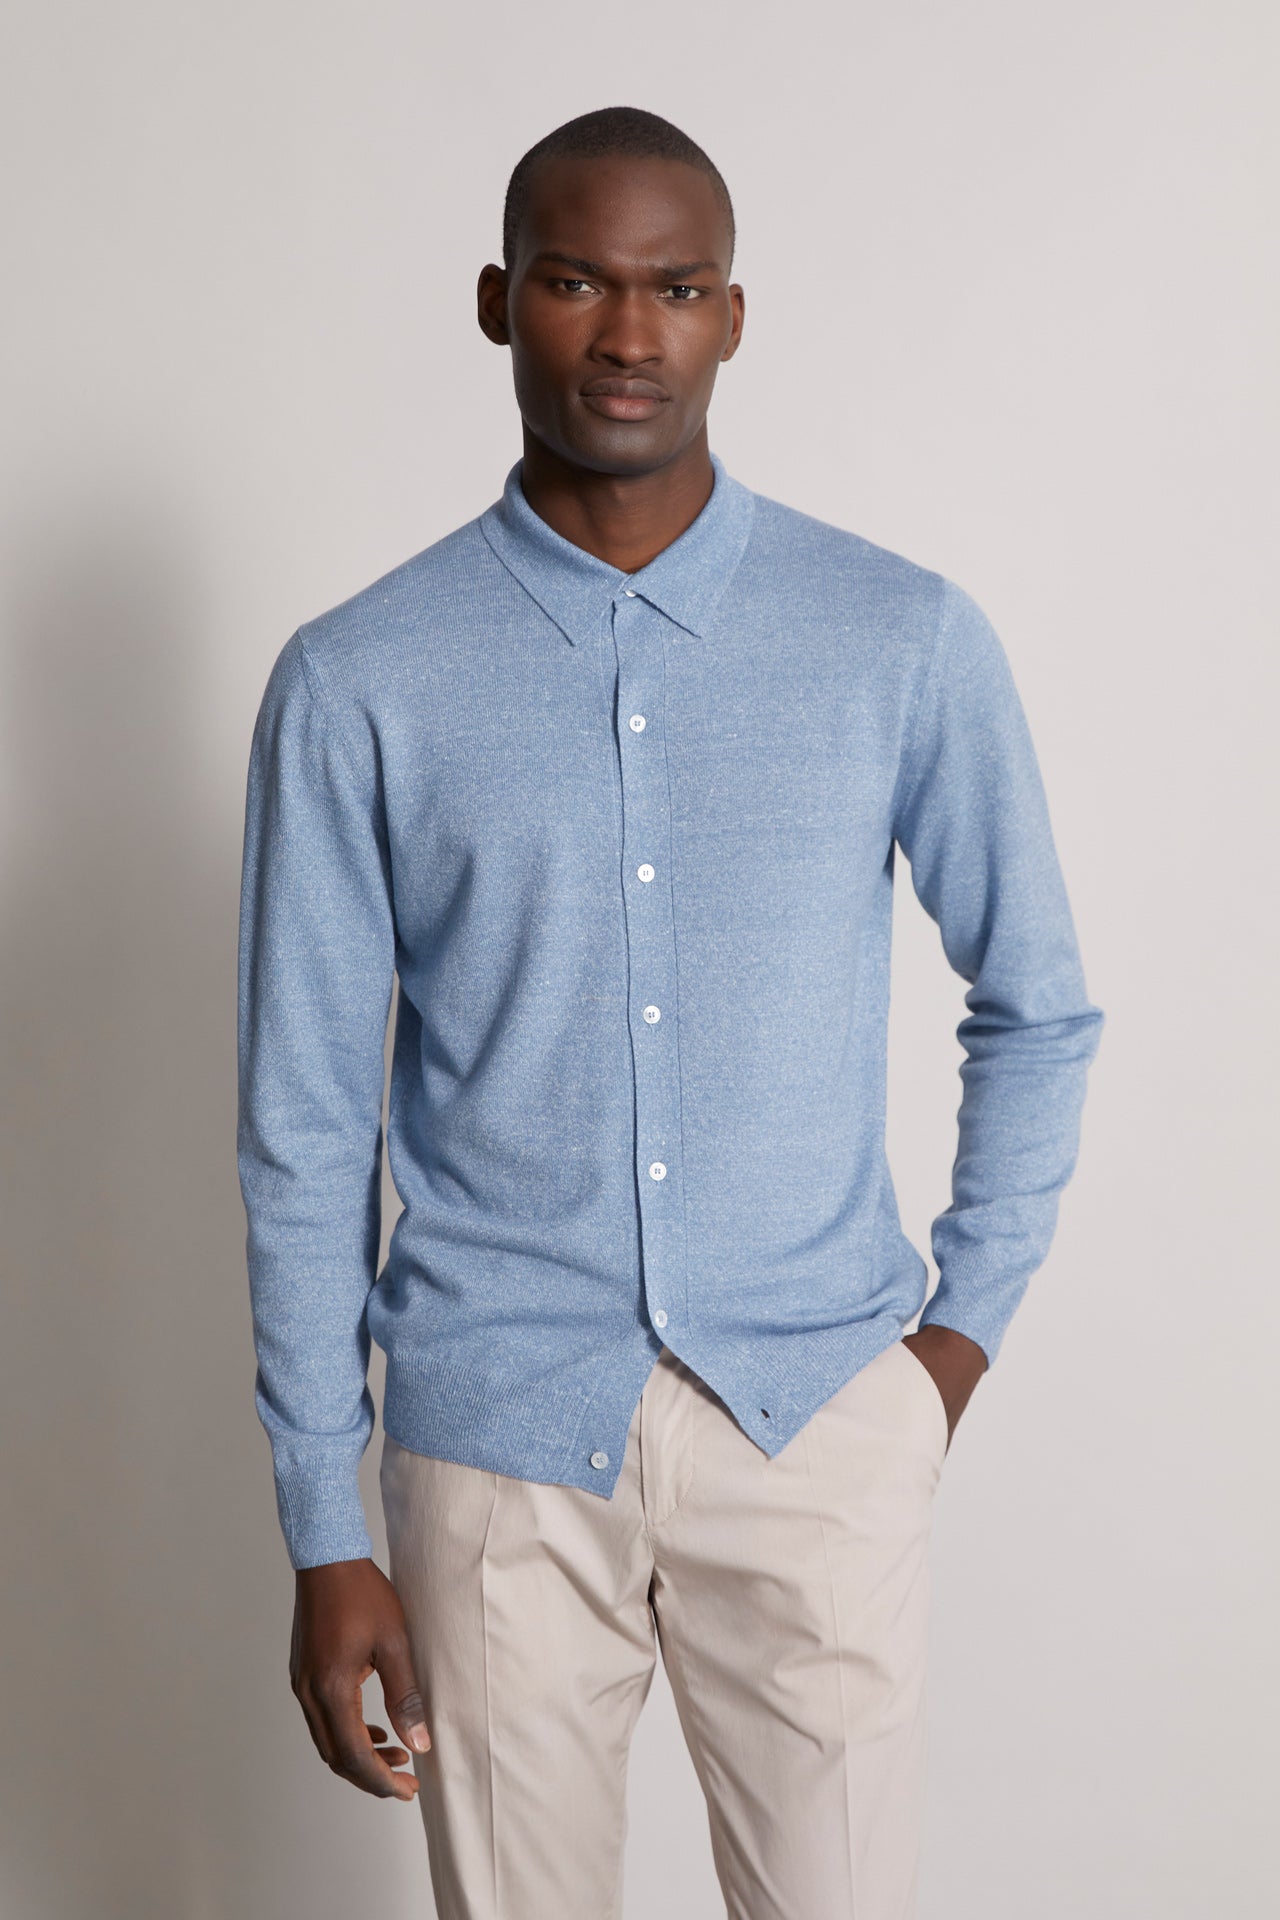 Knitted Shirt in cashmere linen blend